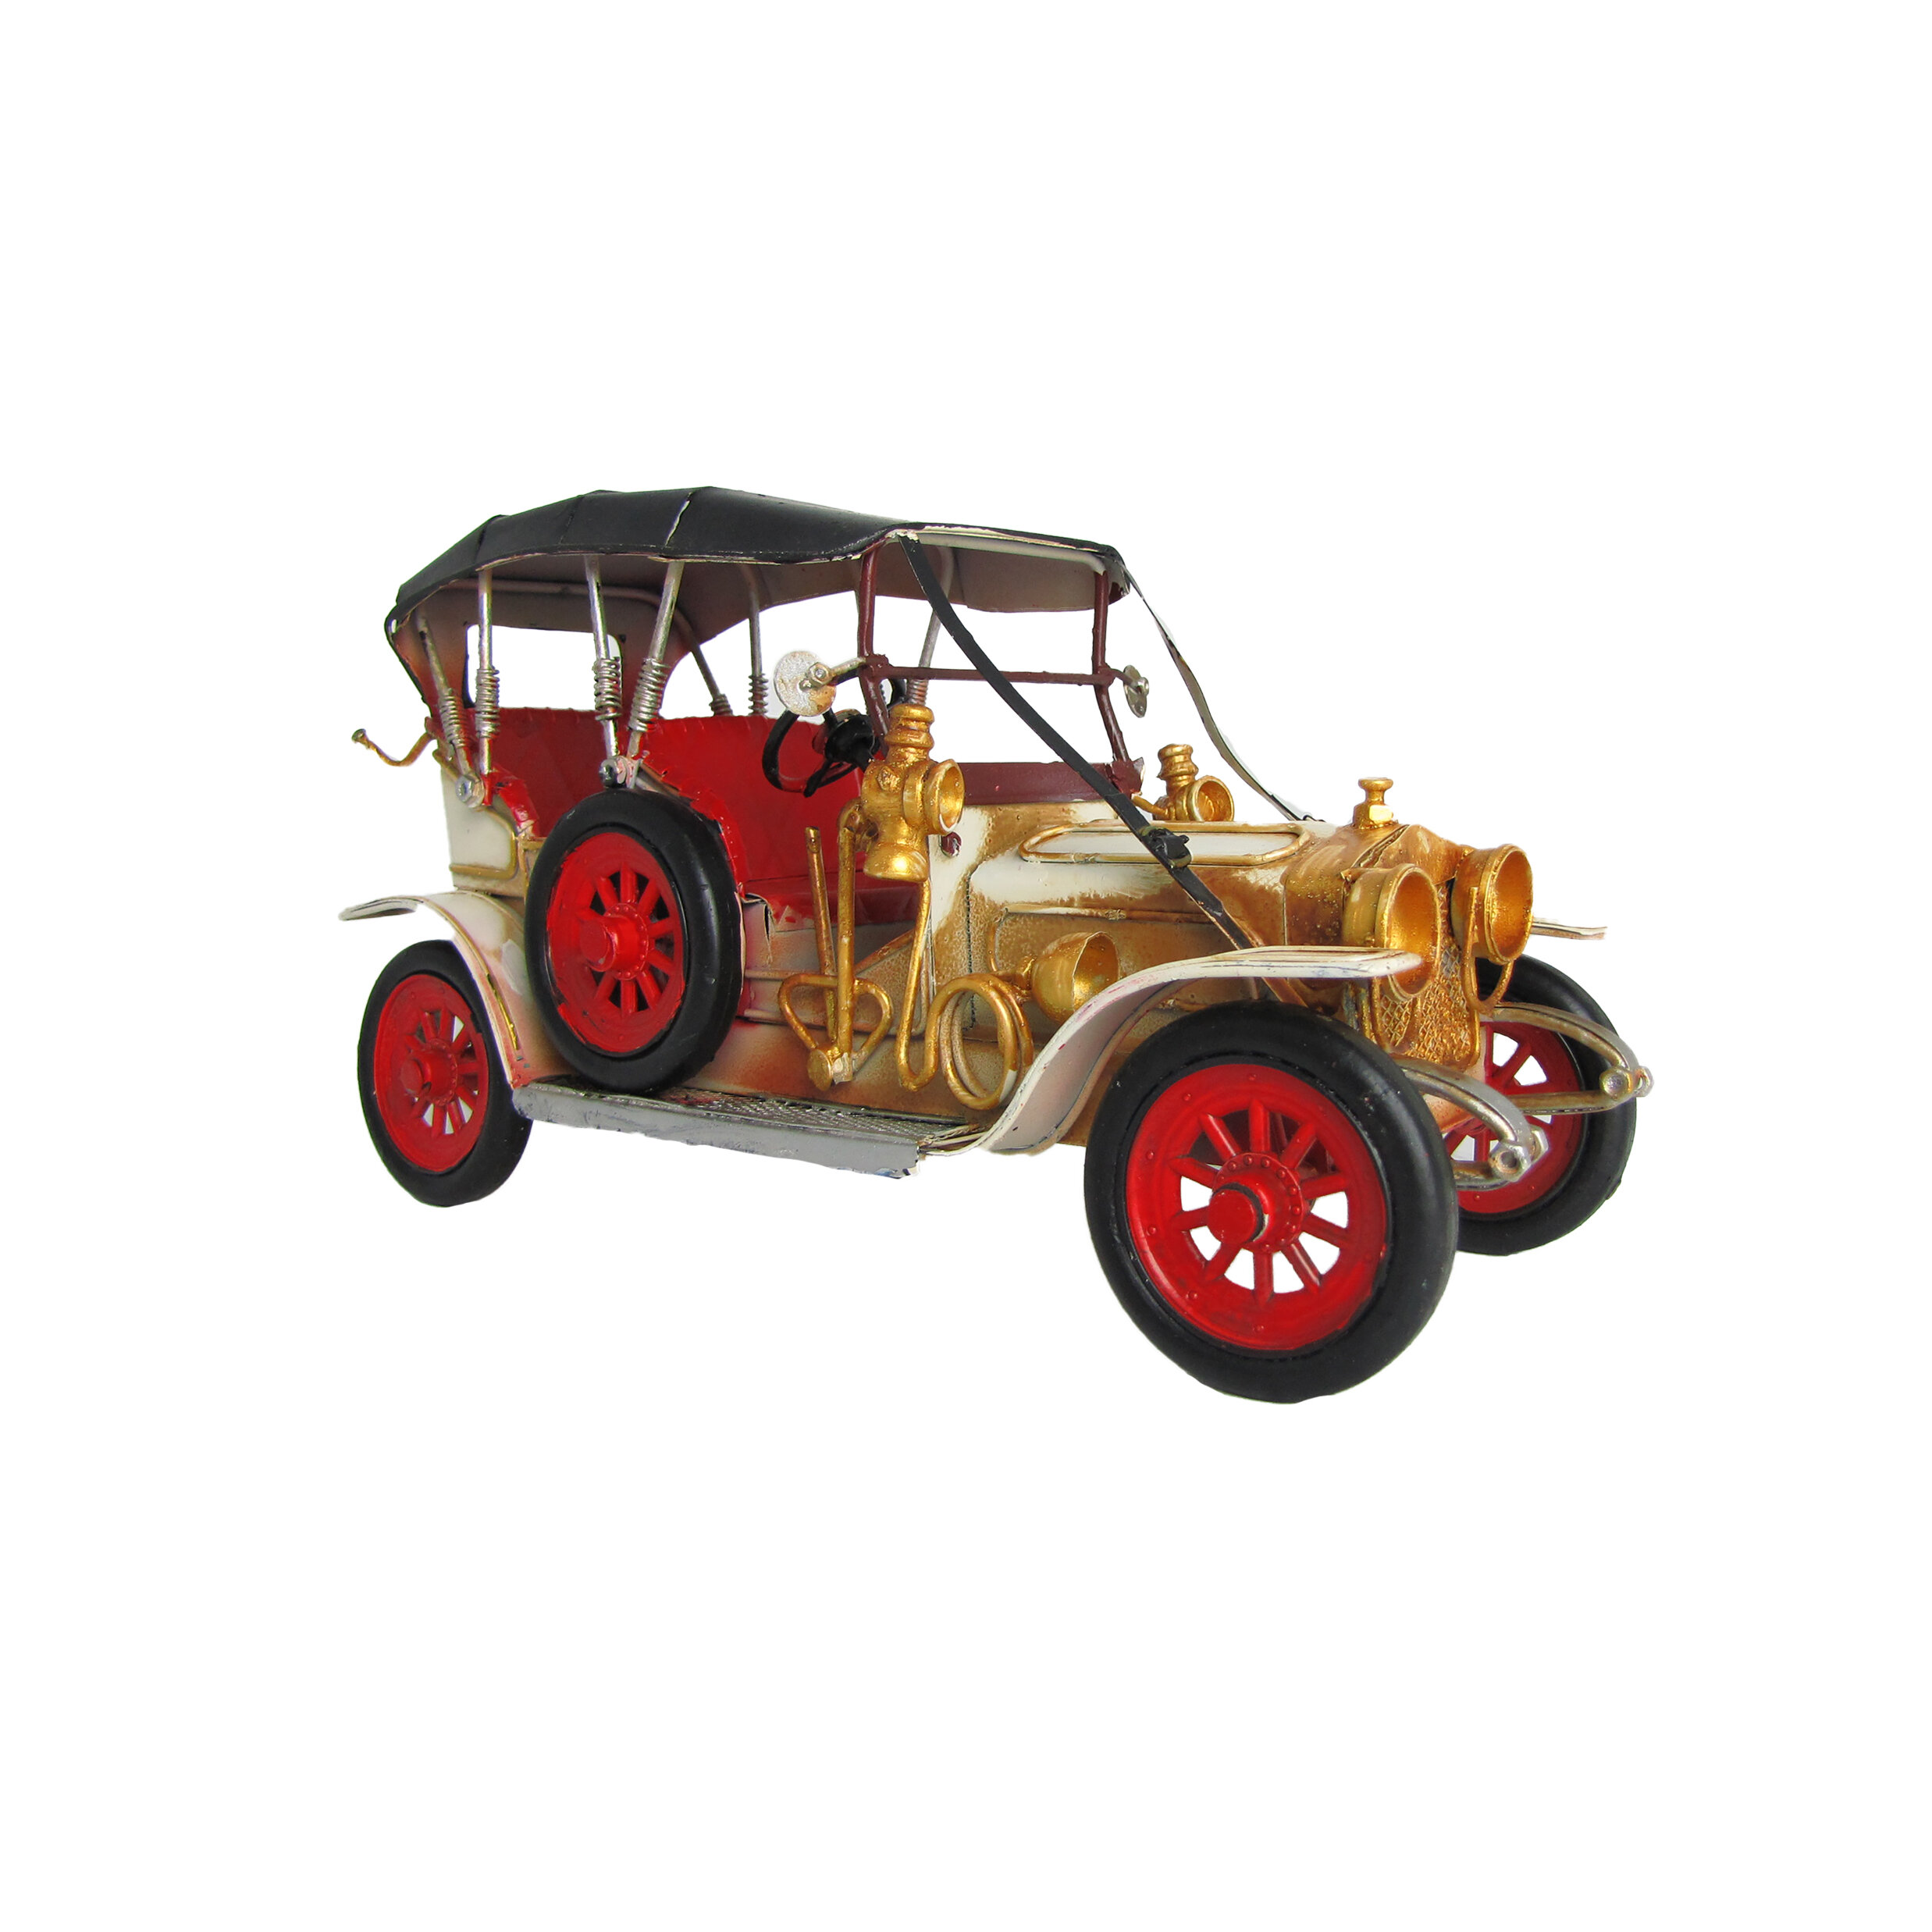 Williston Forge Belford Transportation Model Car Or Vehicle